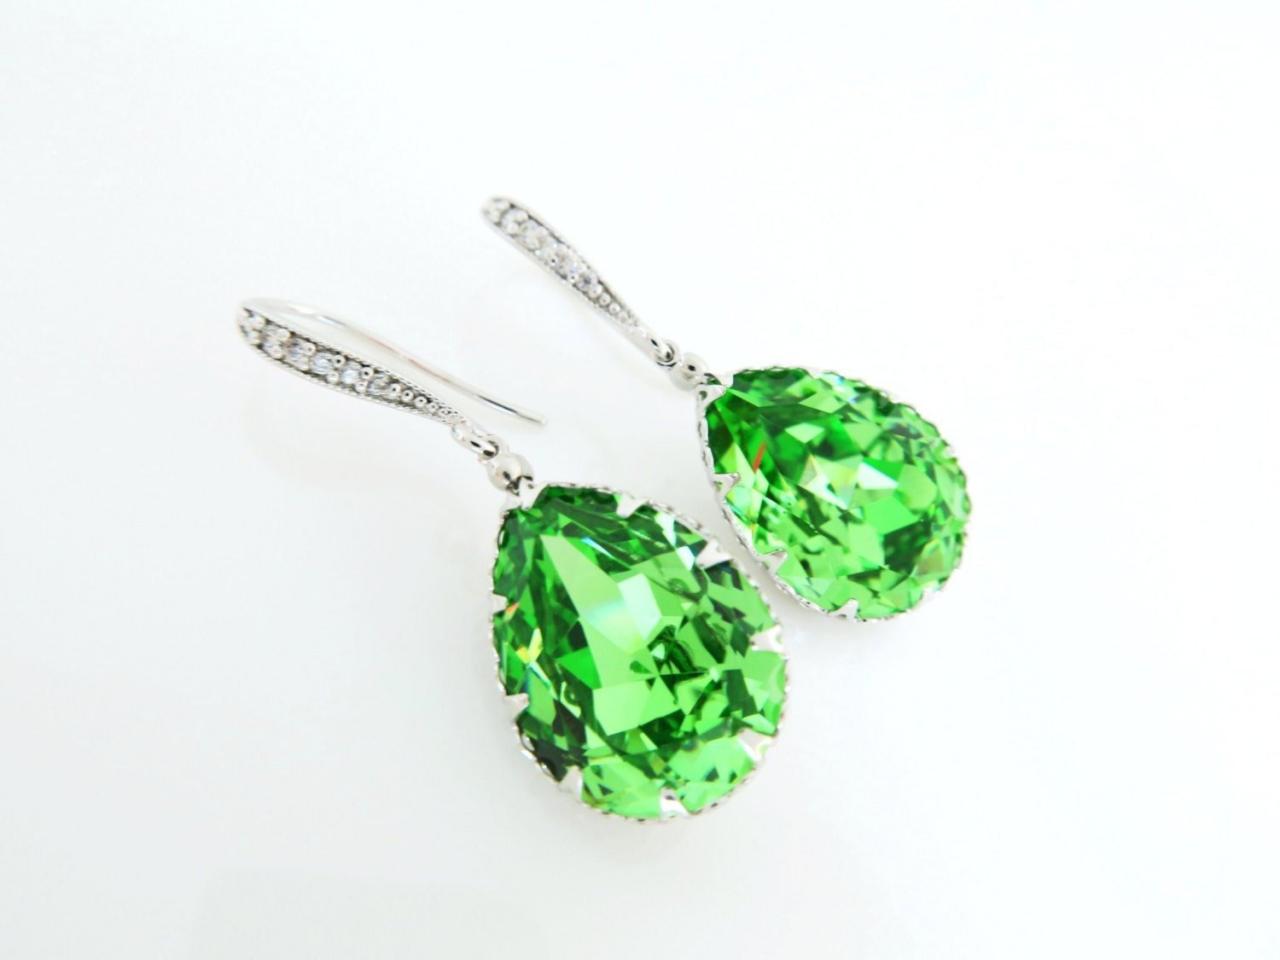 Light Green Earrings Swarovski Crystal Peridot Teardrop Earrings Bridal Jewelry Bridesmaid Gift Wedding Jewelry August Birthstone (e190)